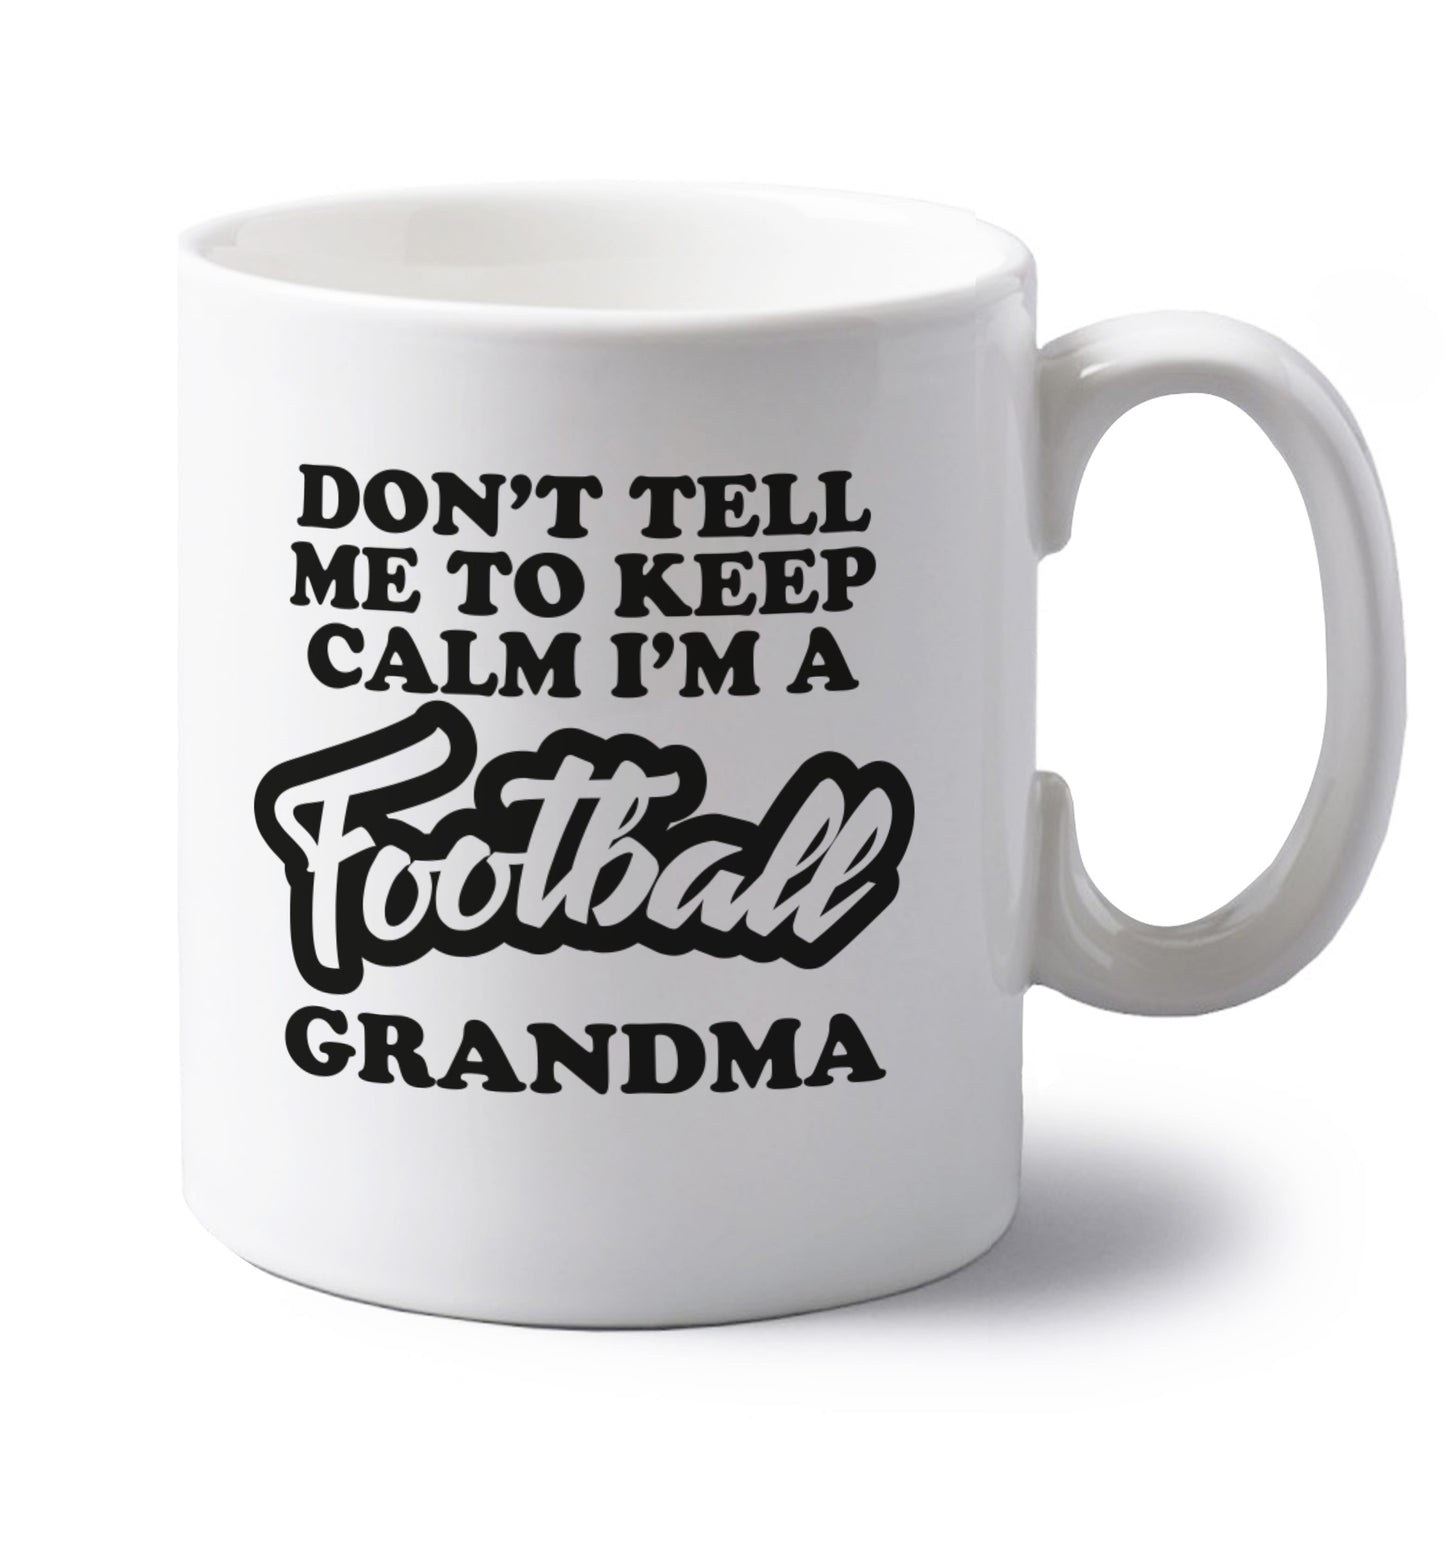 Don't tell me to keep calm I'm a football grandma left handed white ceramic mug 